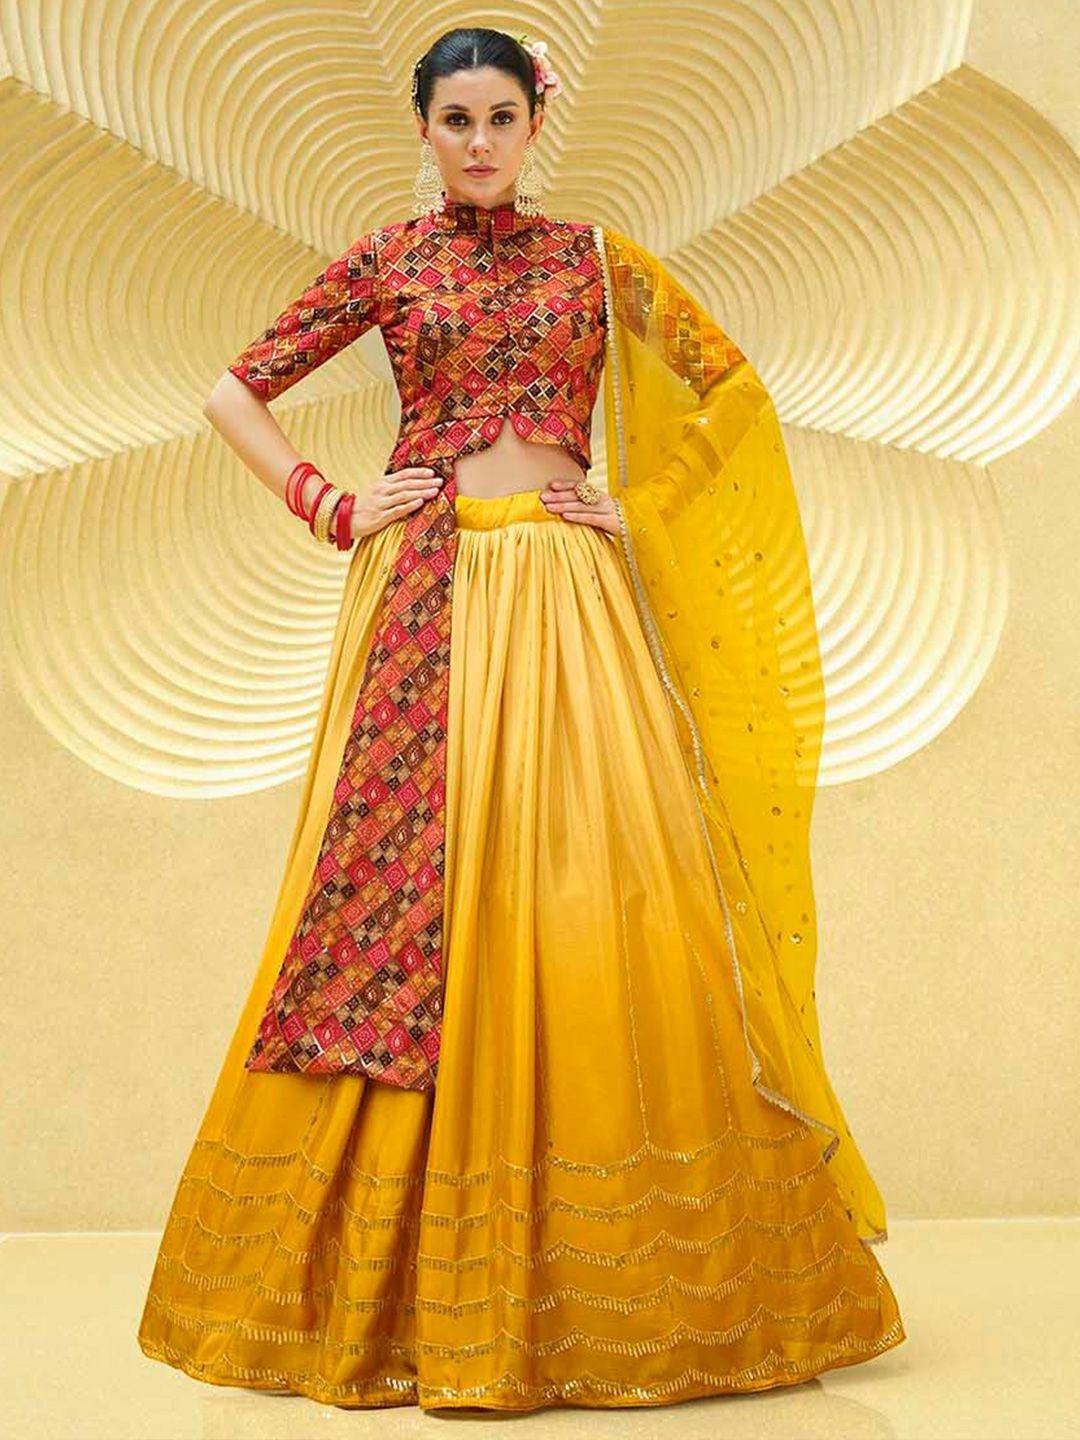 shubhkala geometric printed ready to wear lehenga & blouse with dupatta